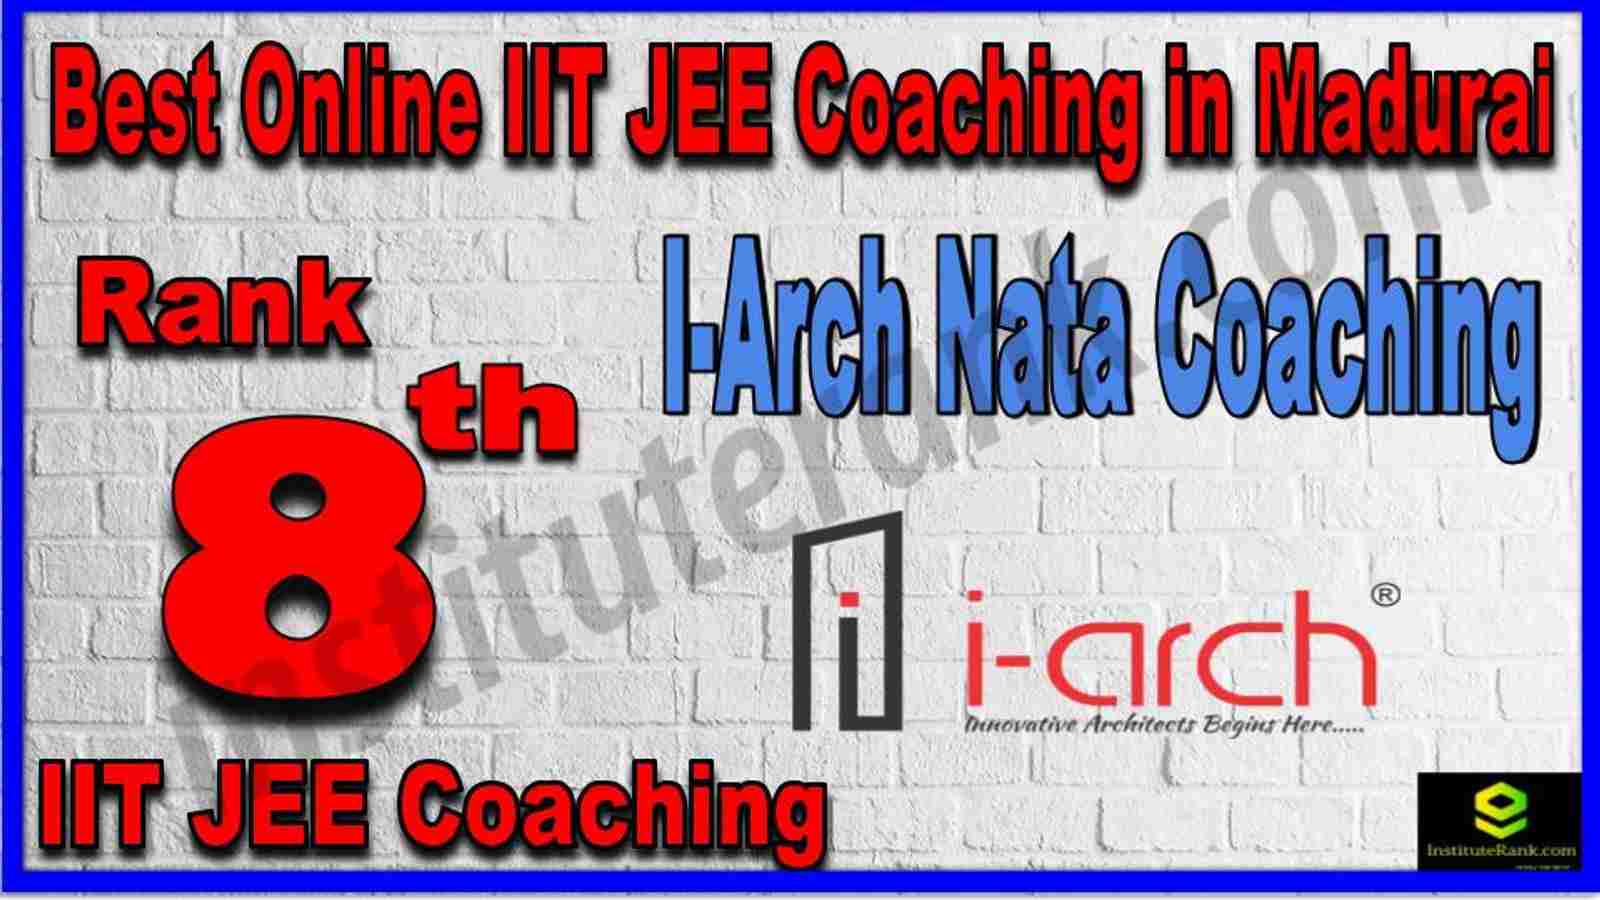 Rank 8th Best Online IIT JEE Coaching in Madurai